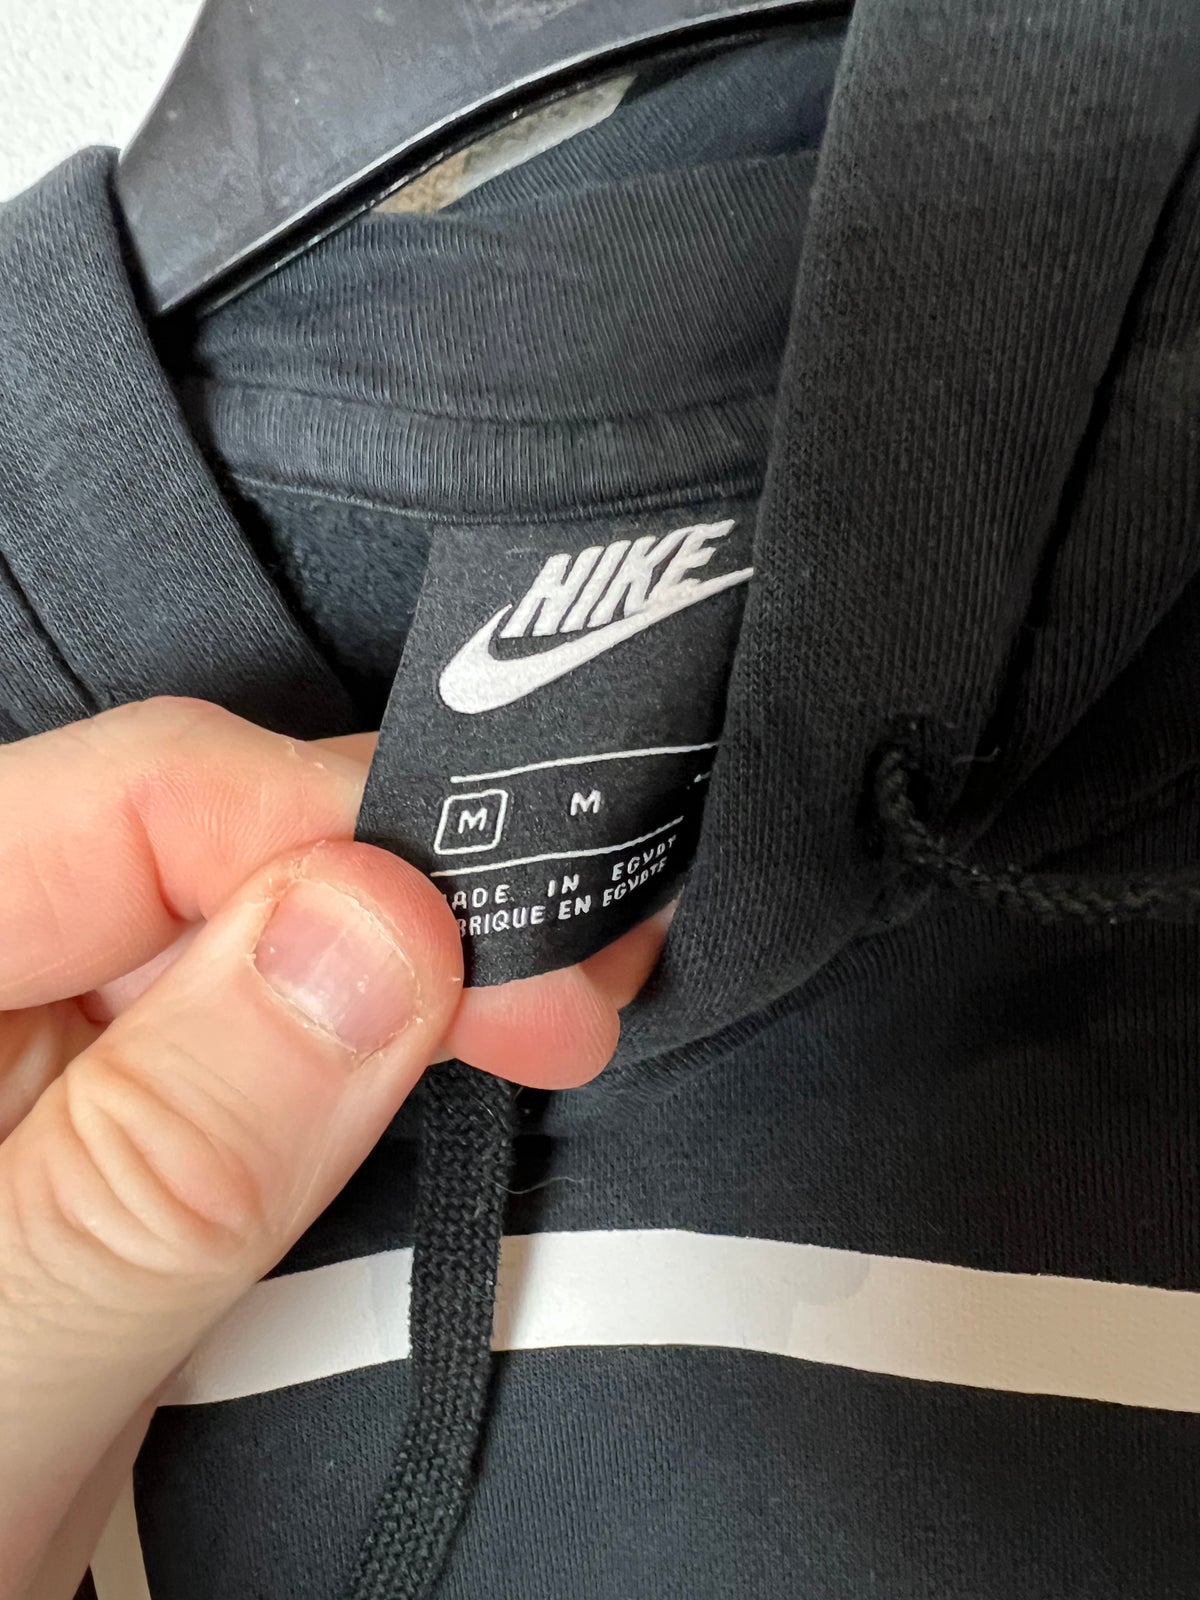 Hættetrøje, Nike Air , str. M